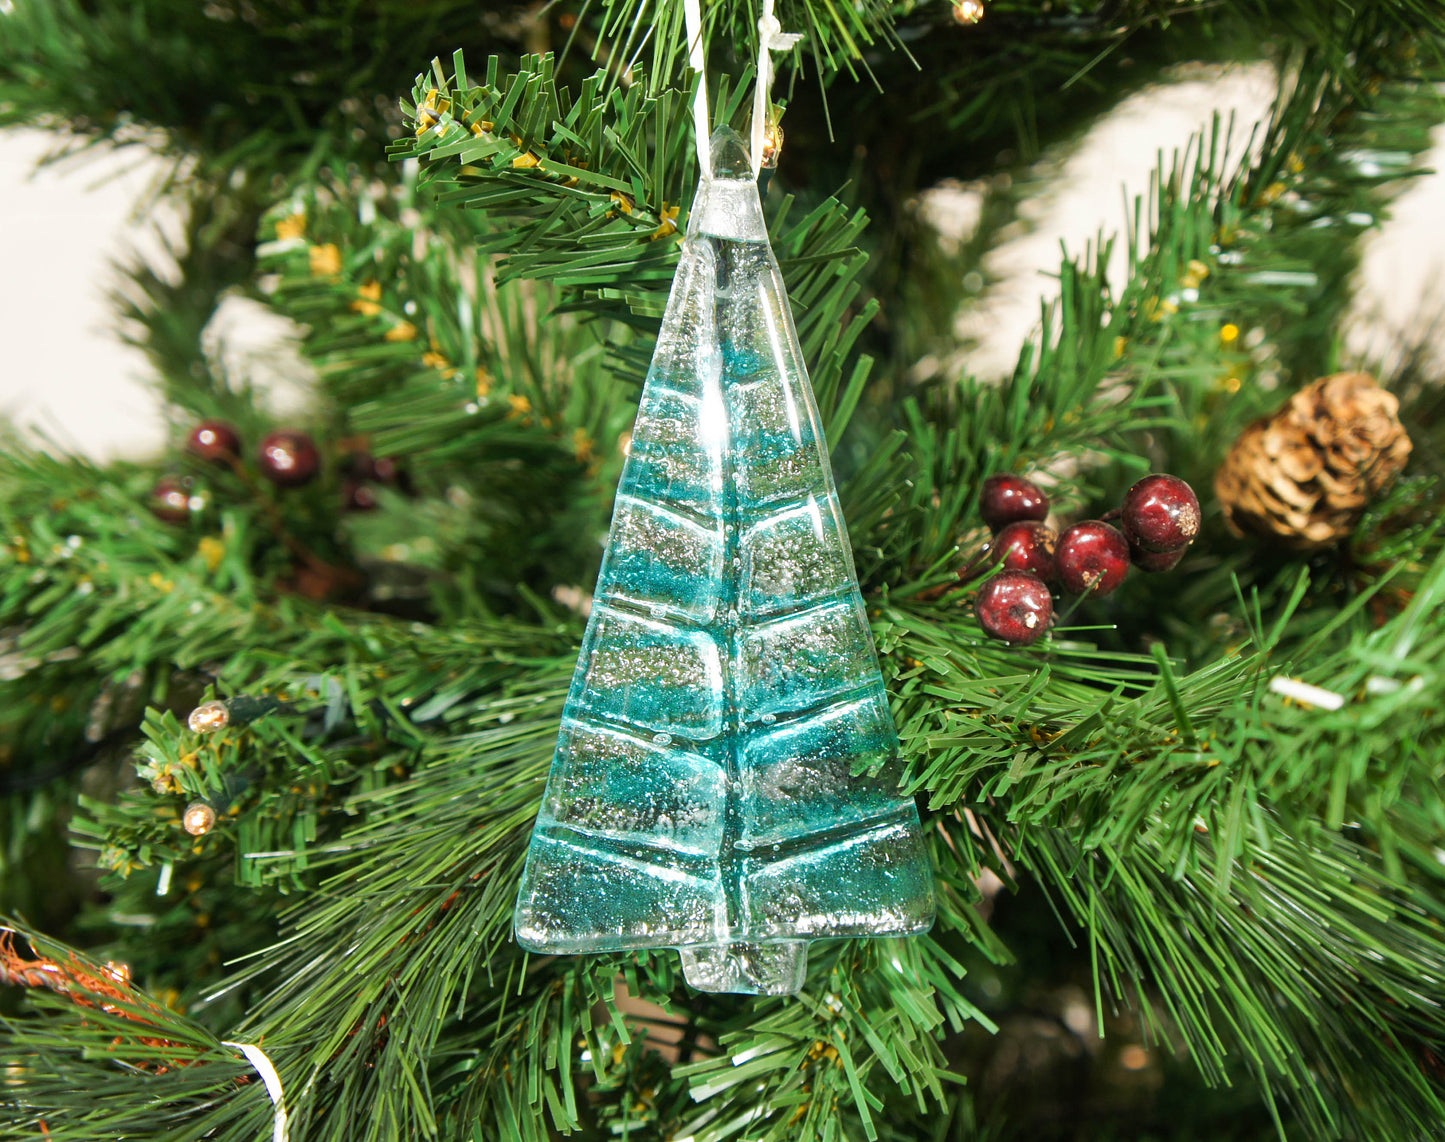 1 to 6 Medium Turquoise Glass Trees - Hanging - 12cm/3 3/4"